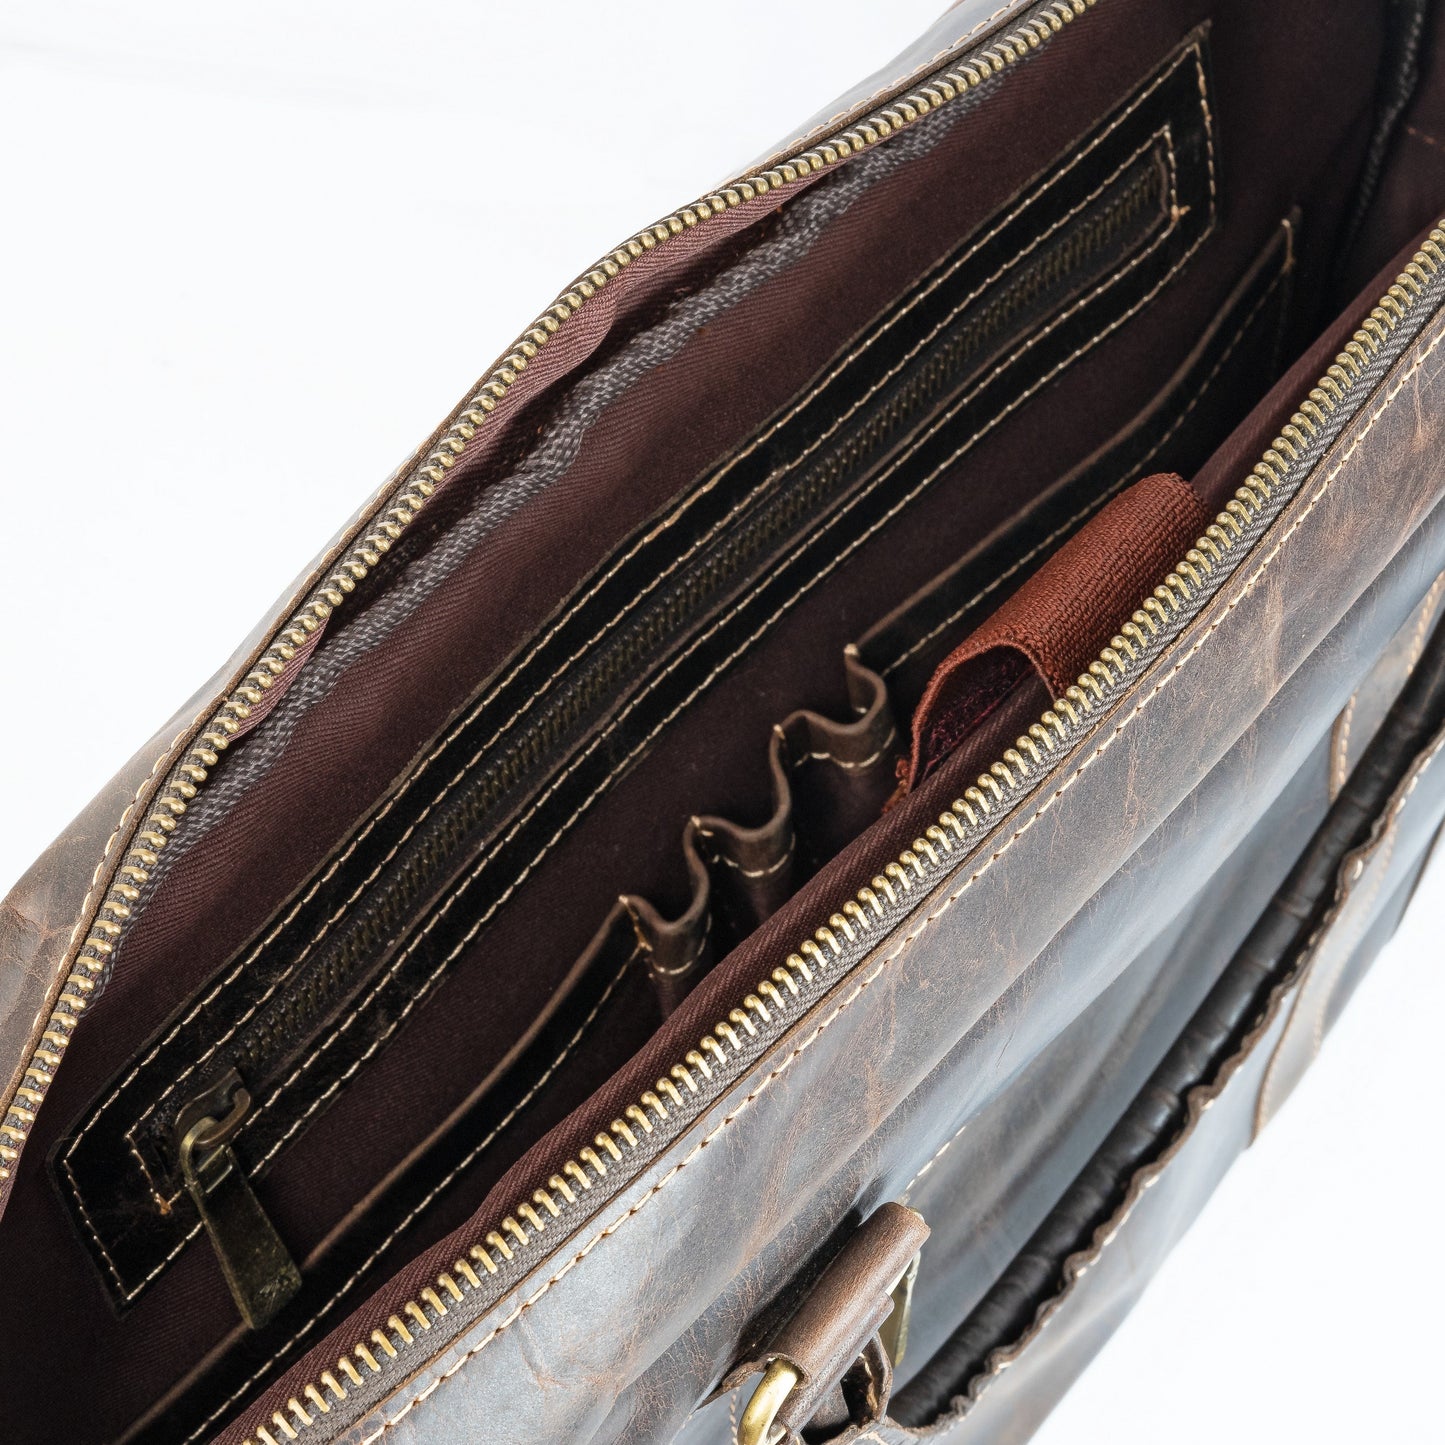 The Maverick Vintage Leather Laptop Bag